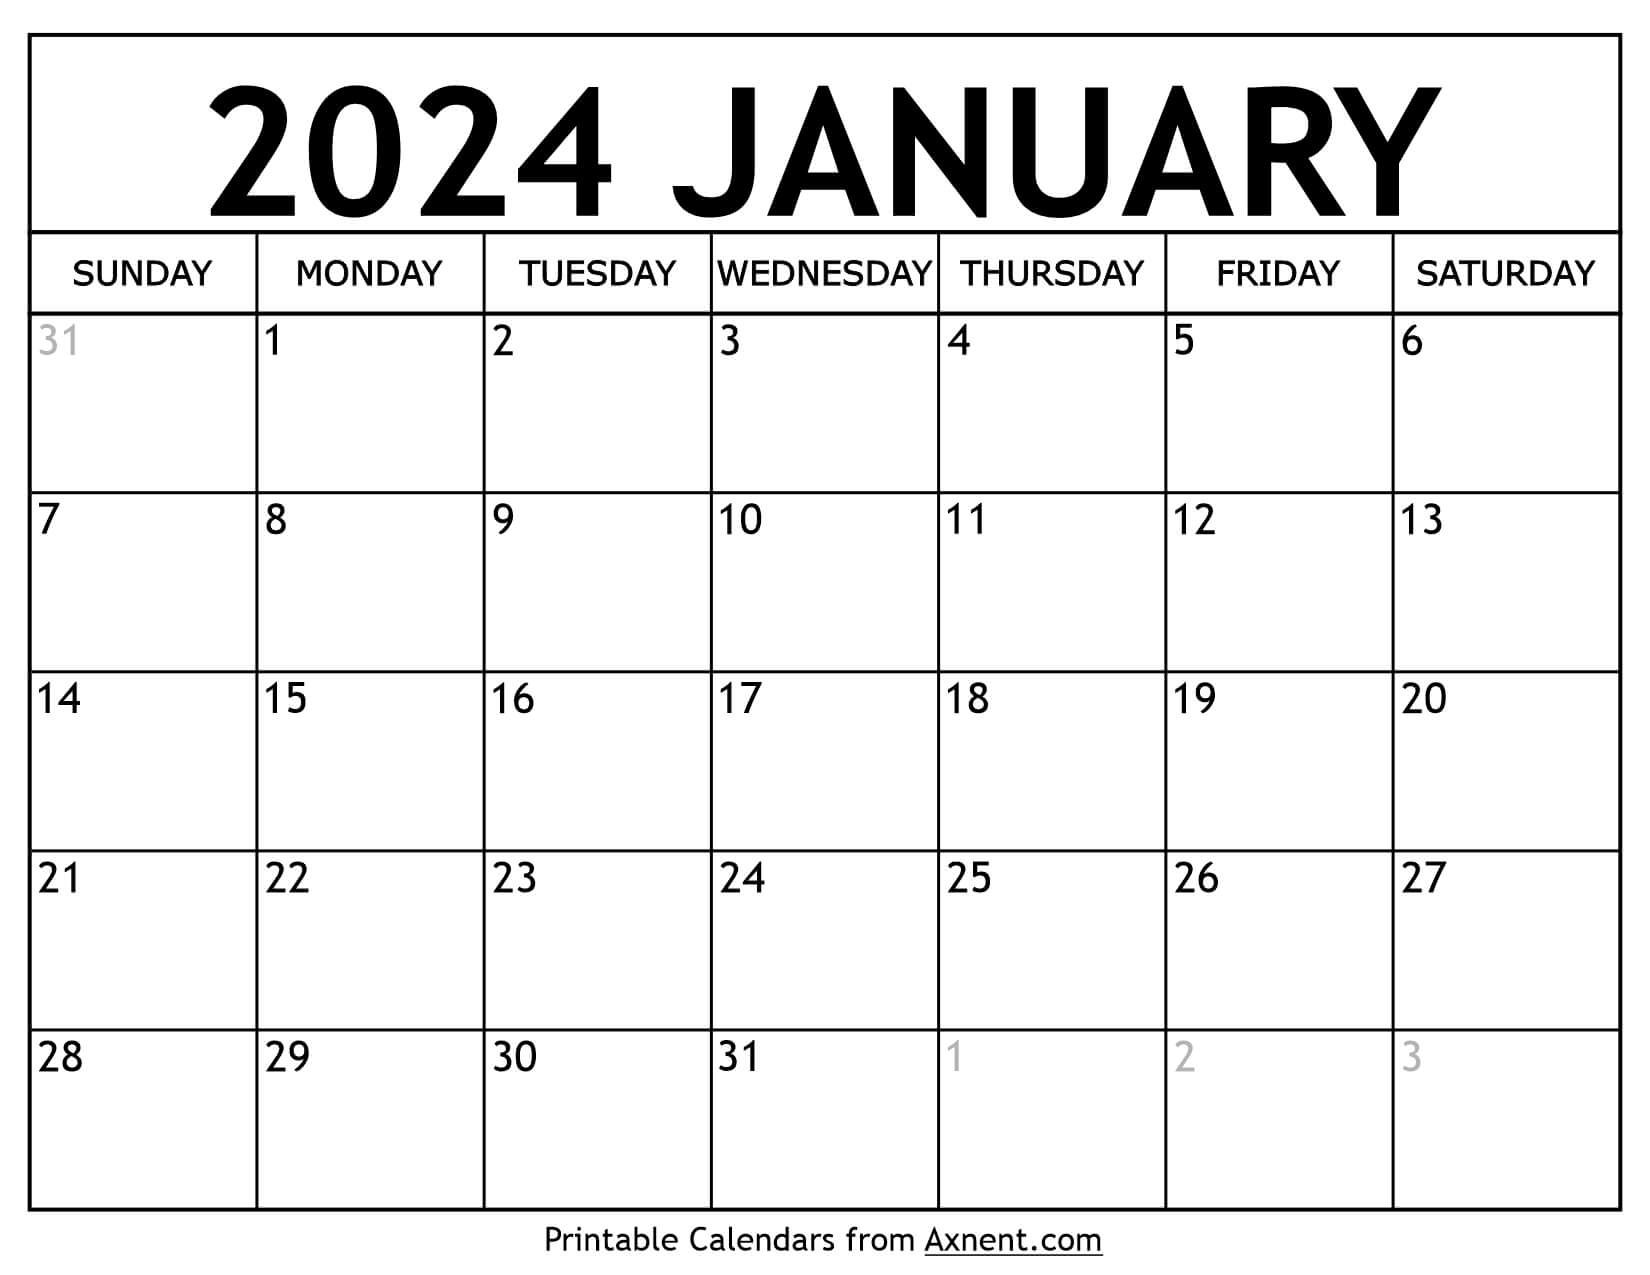 Printable January 2024 Calendar Template - Print Now for January Free Printable Calendar 2024